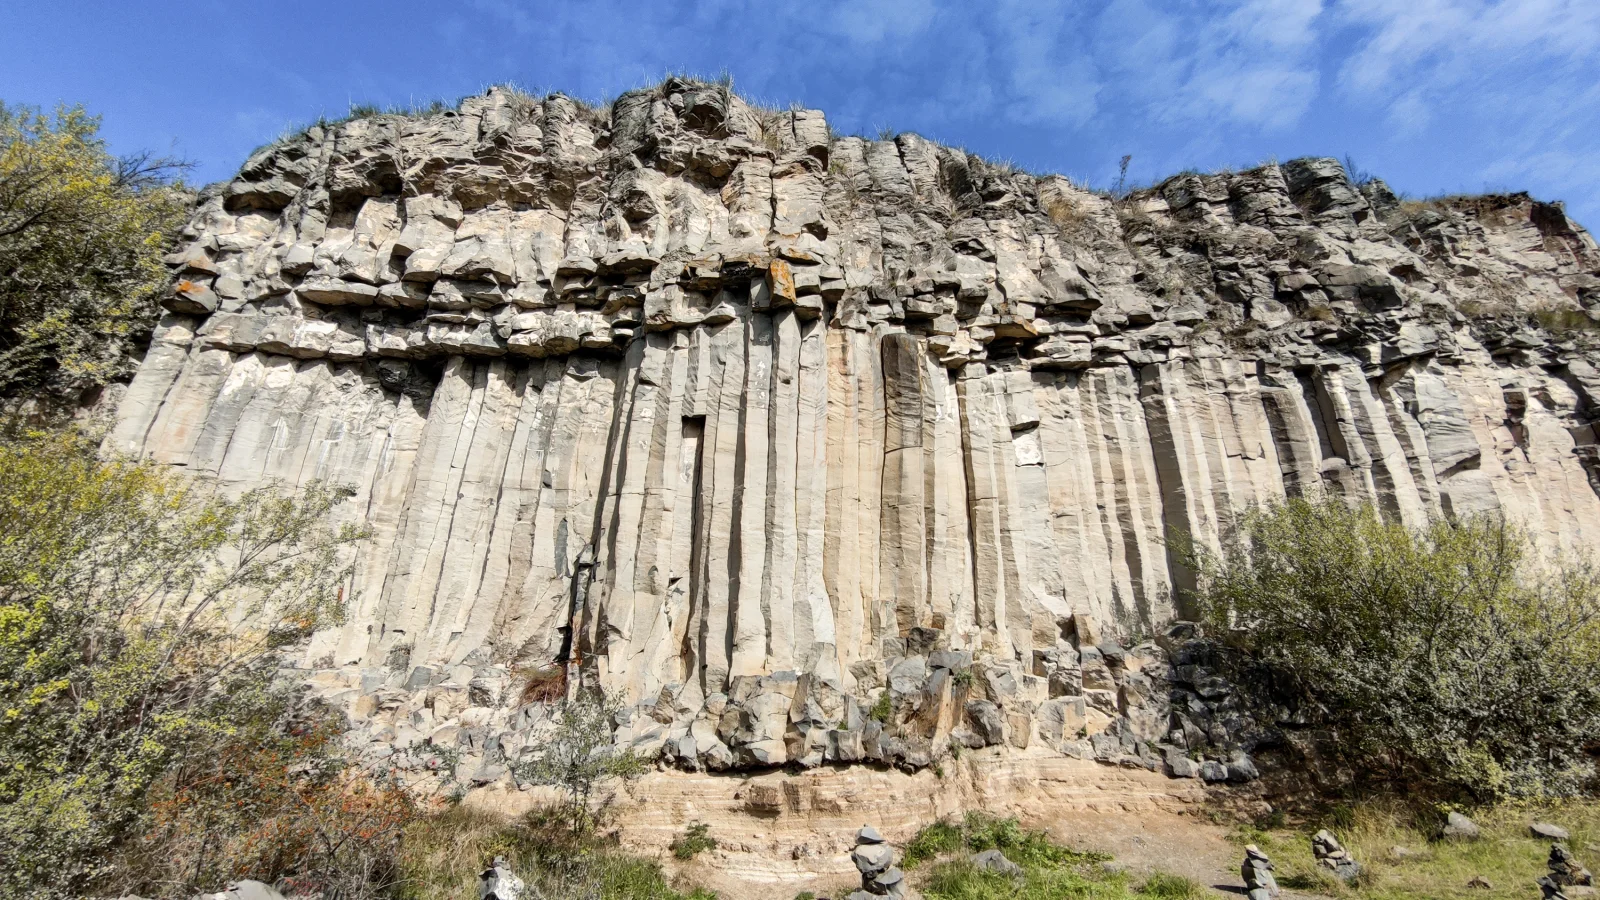 The basalt columns.